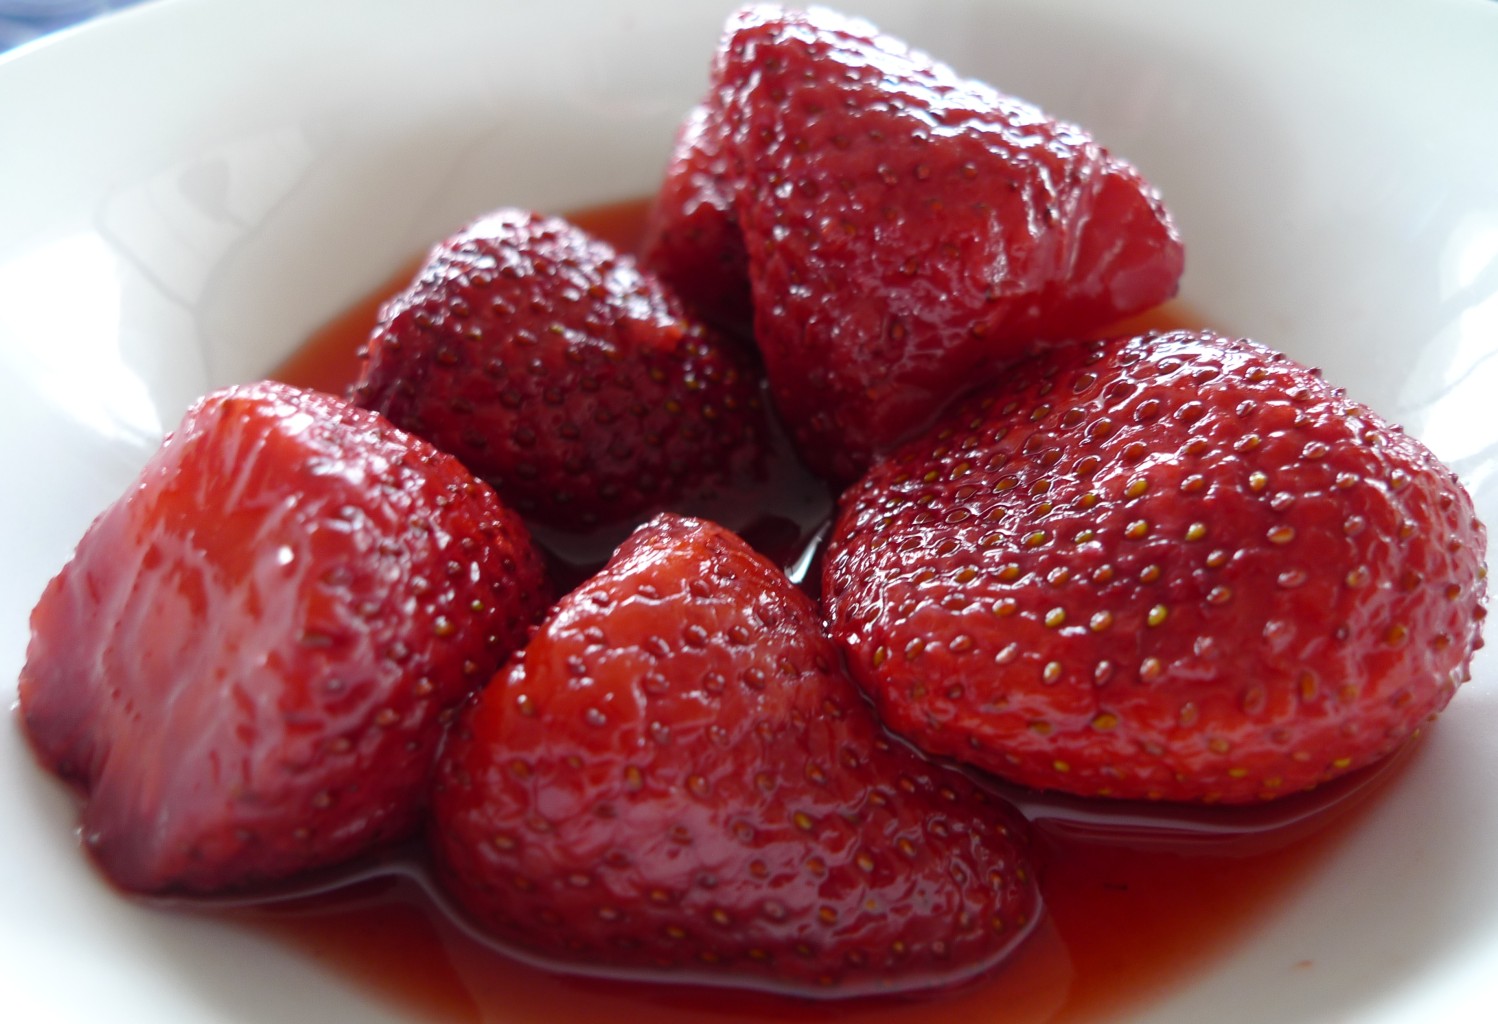 P1010541 - Strawberries Au Juice